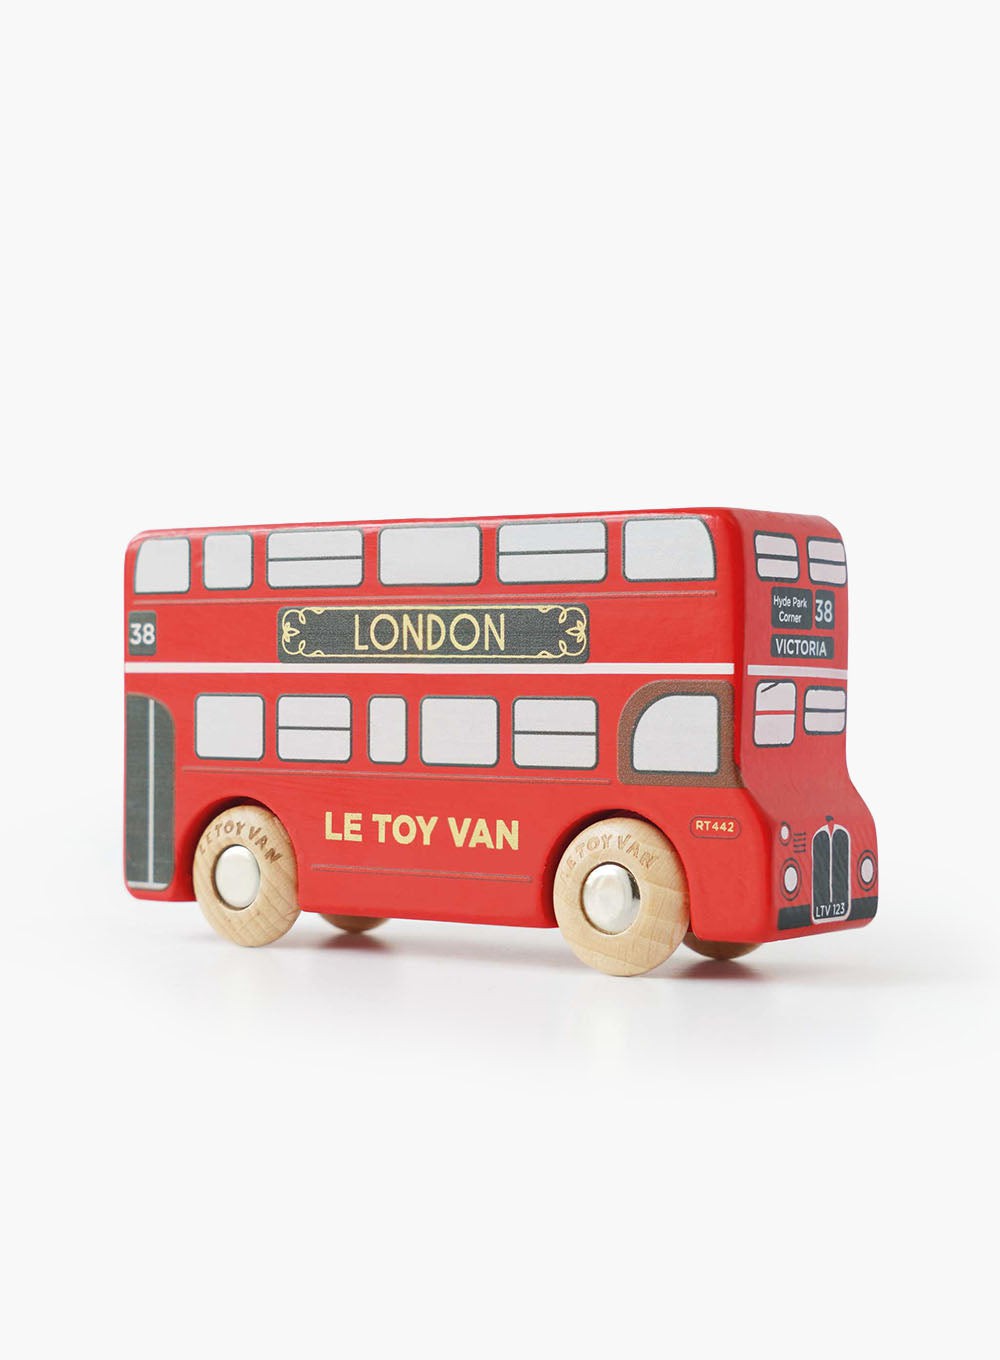 Le Toy Van Toy Le Toy Van Limited Edition London Bus